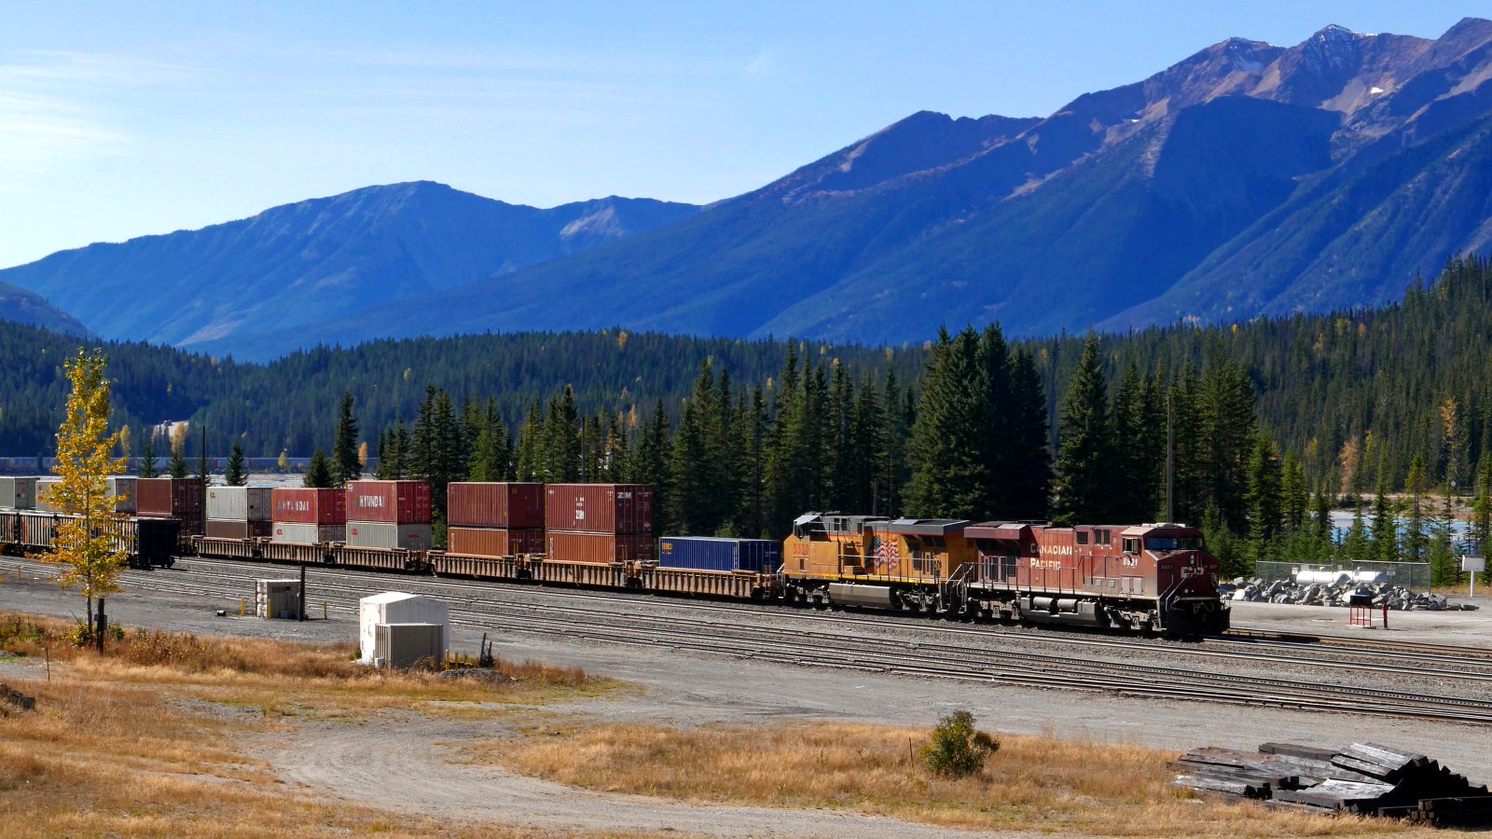 A Canadian Pacific intermodal train rolls into Field, BC for a crew change. Photo: Tony Field.